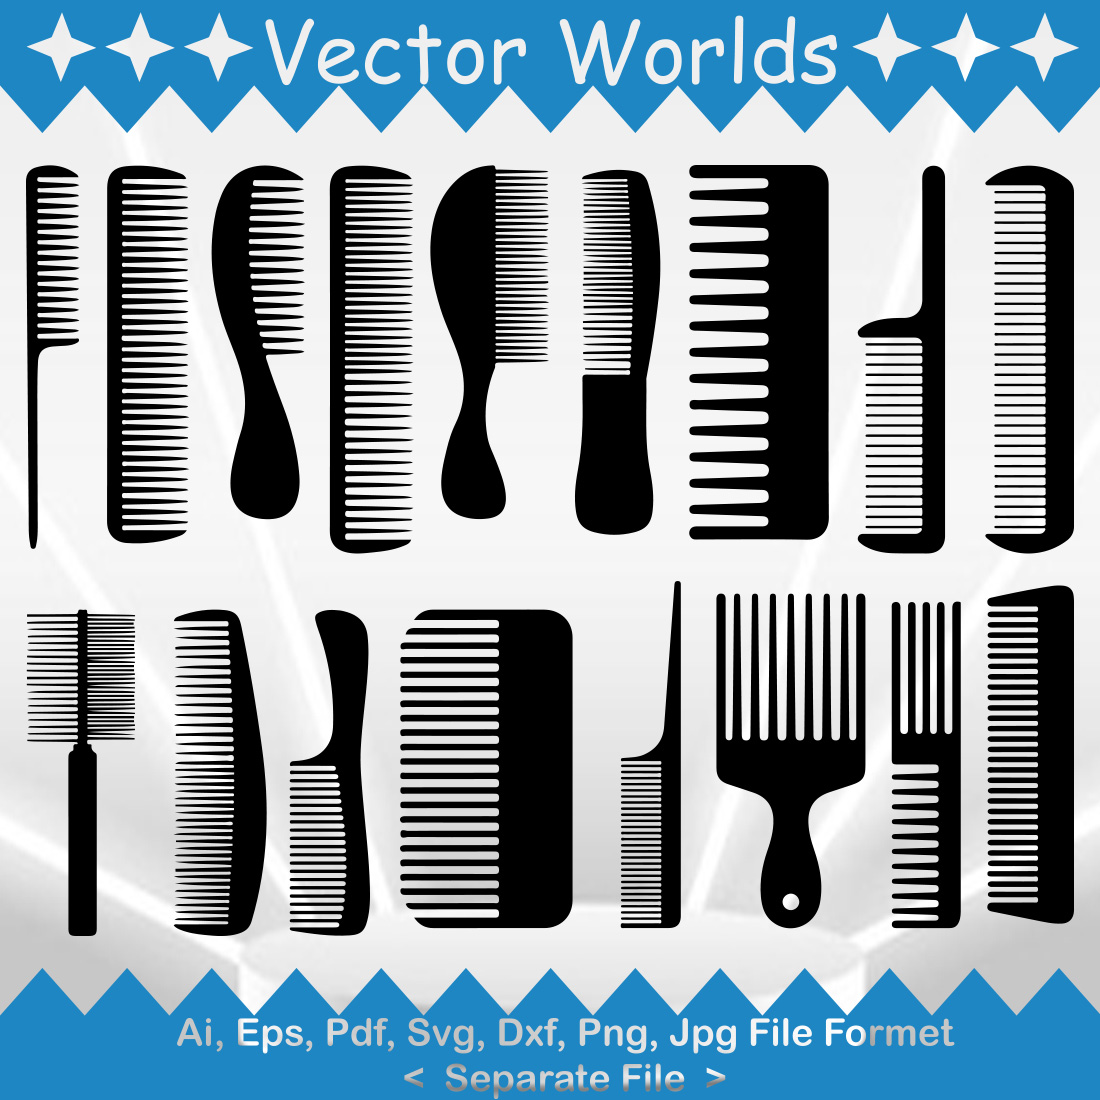 Comb SVG Vector Design cover image.